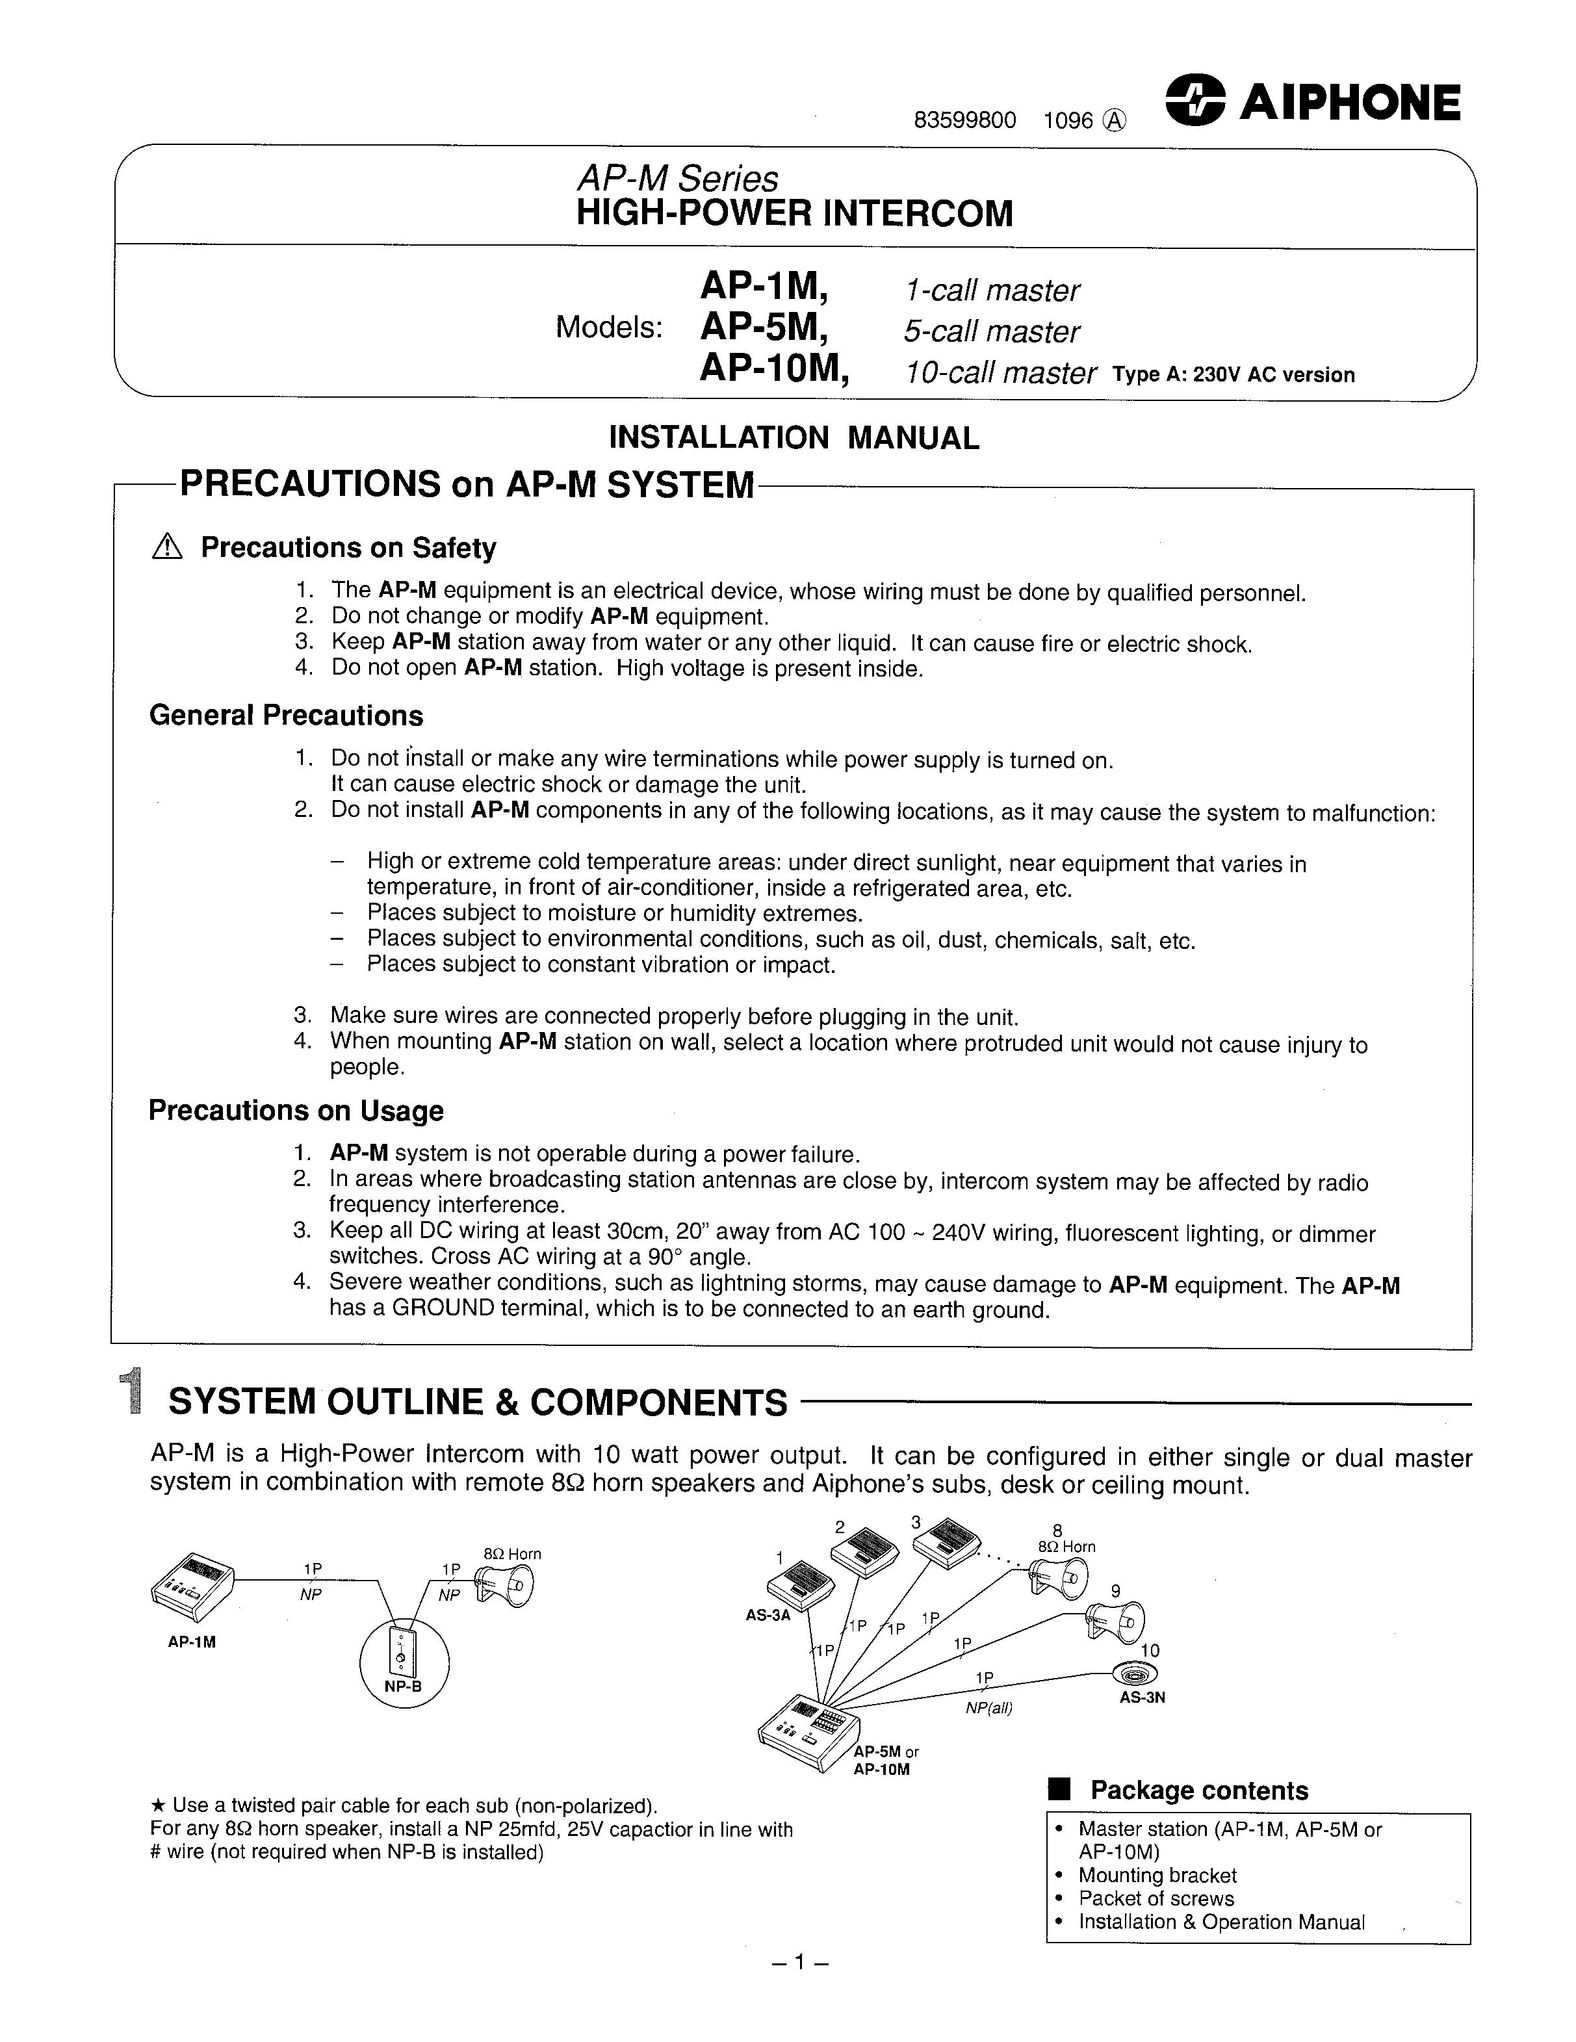 Aiphone AP-10M Intercom System User Manual